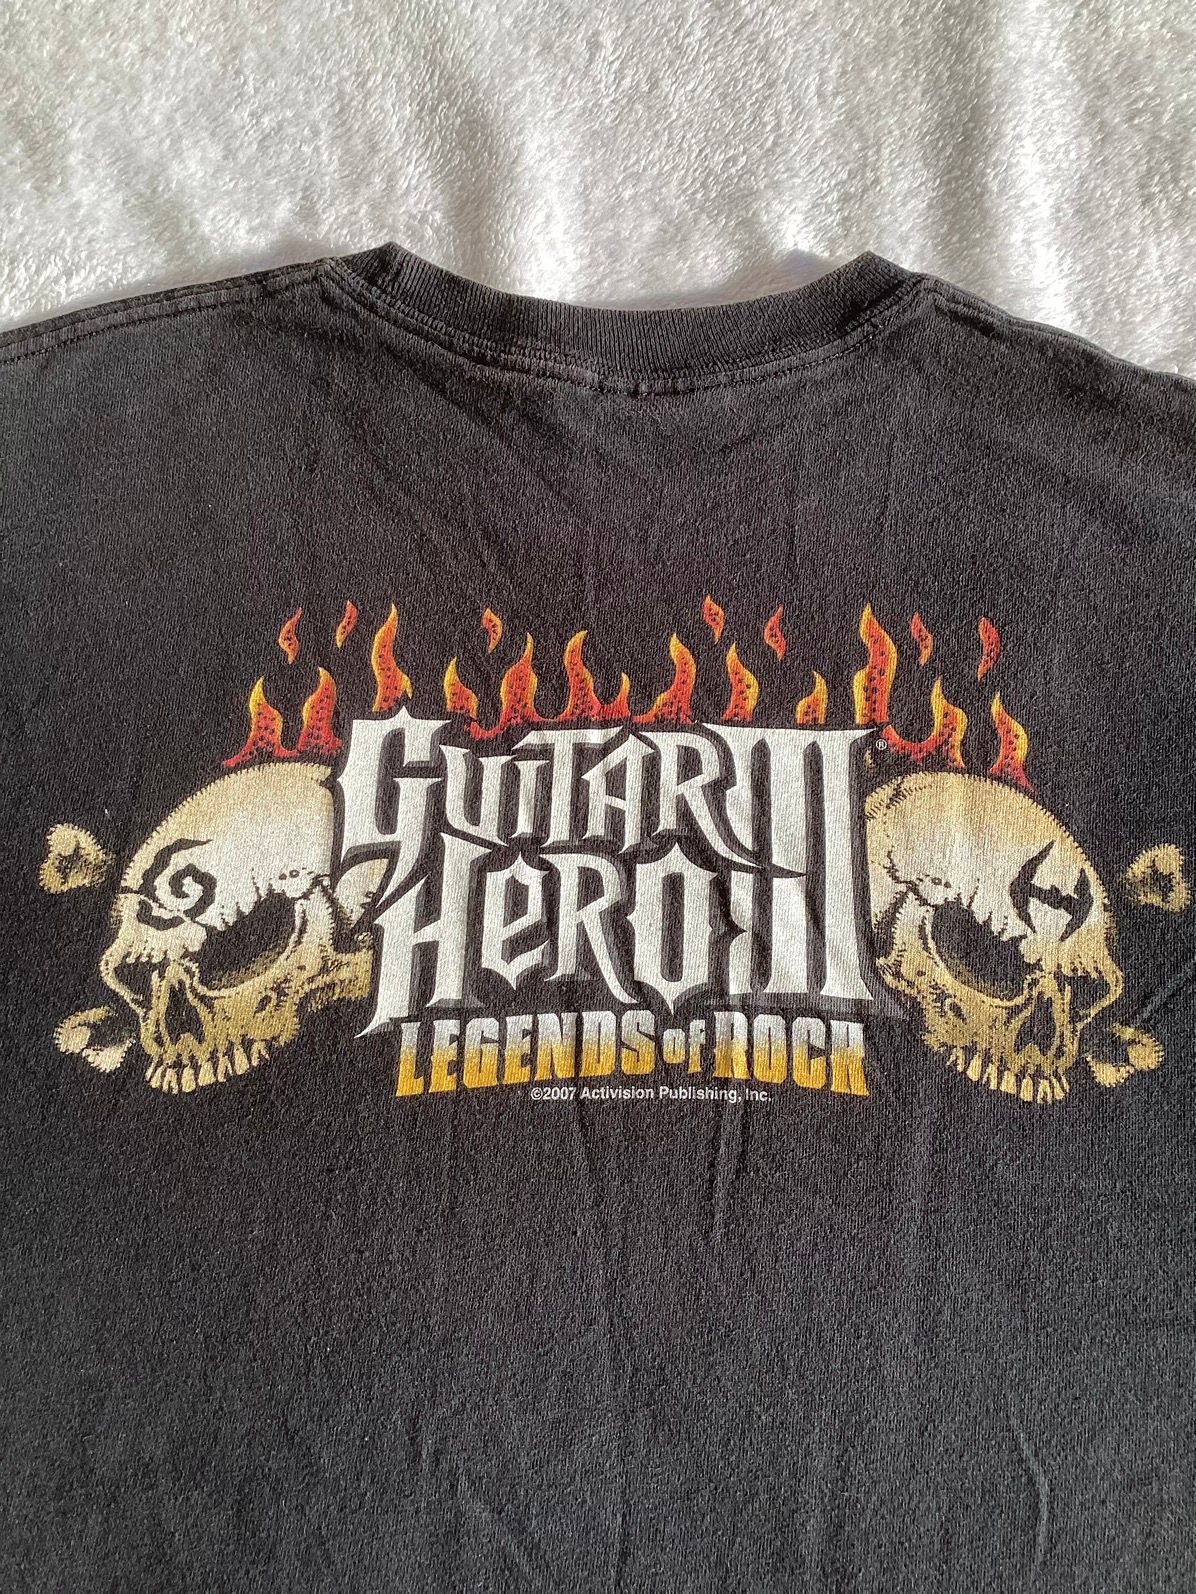 Vintage Vtg 2007 guitar hero 3 legends of rock blues Inferno shirt Size US S / EU 44-46 / 1 - 3 Thumbnail